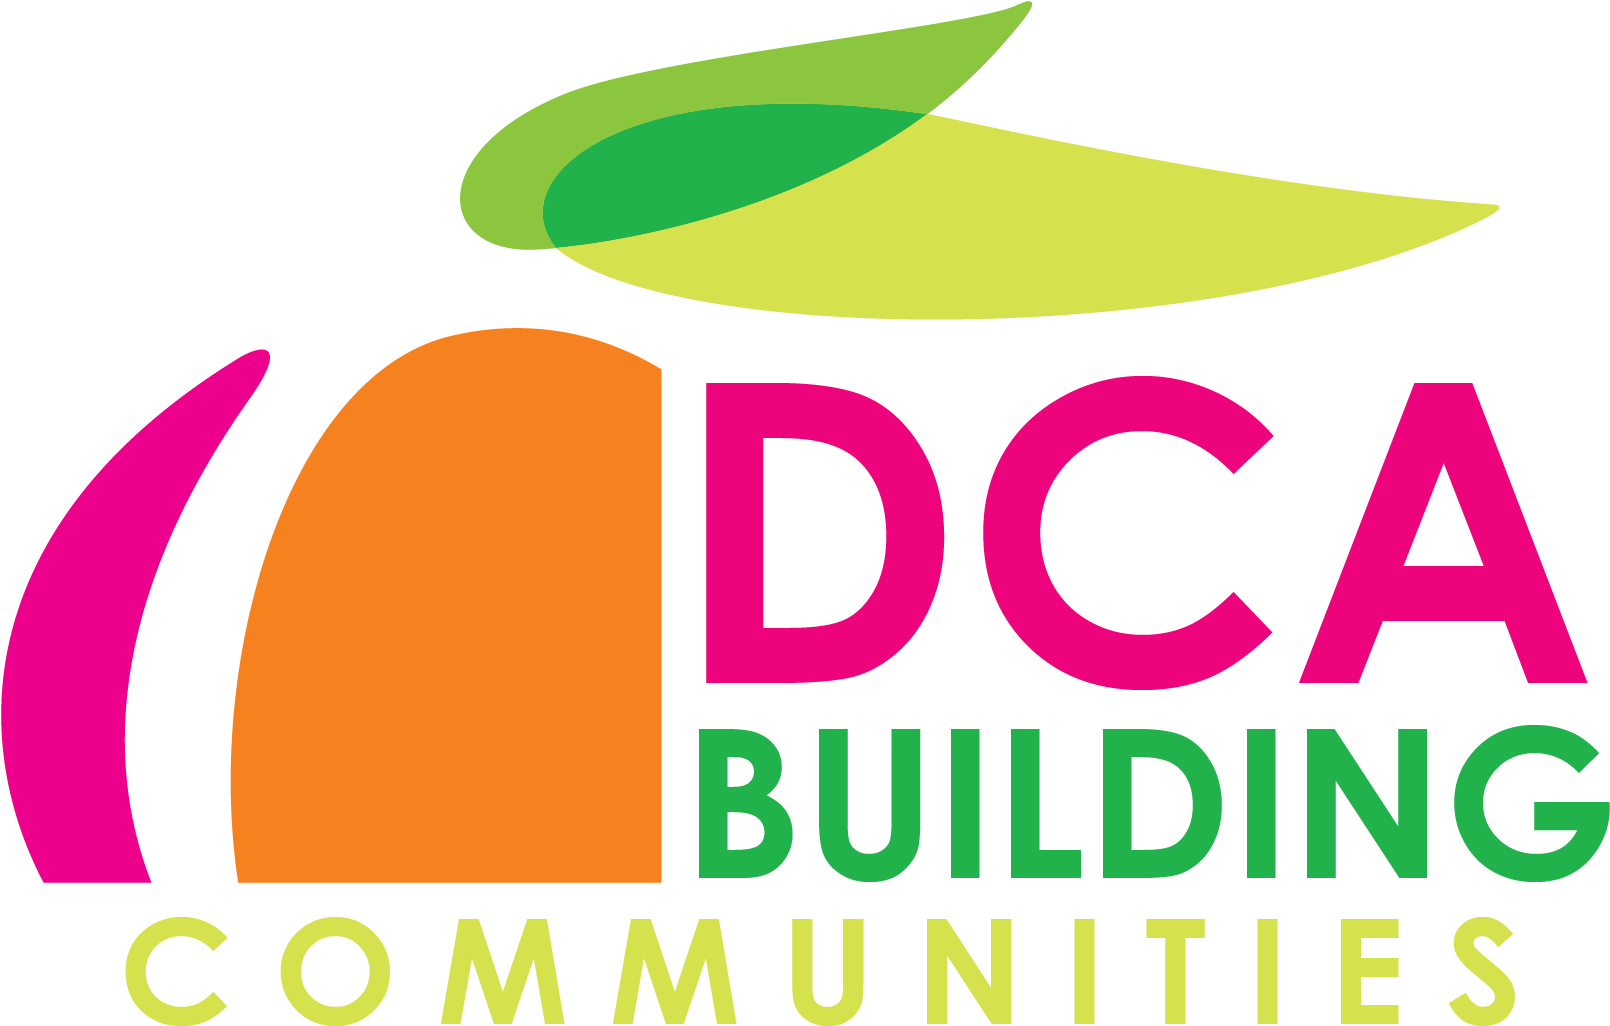 Dca Building Communities - Georgia Department Of Community Affairs Logo Png (1619x1068), Png Download